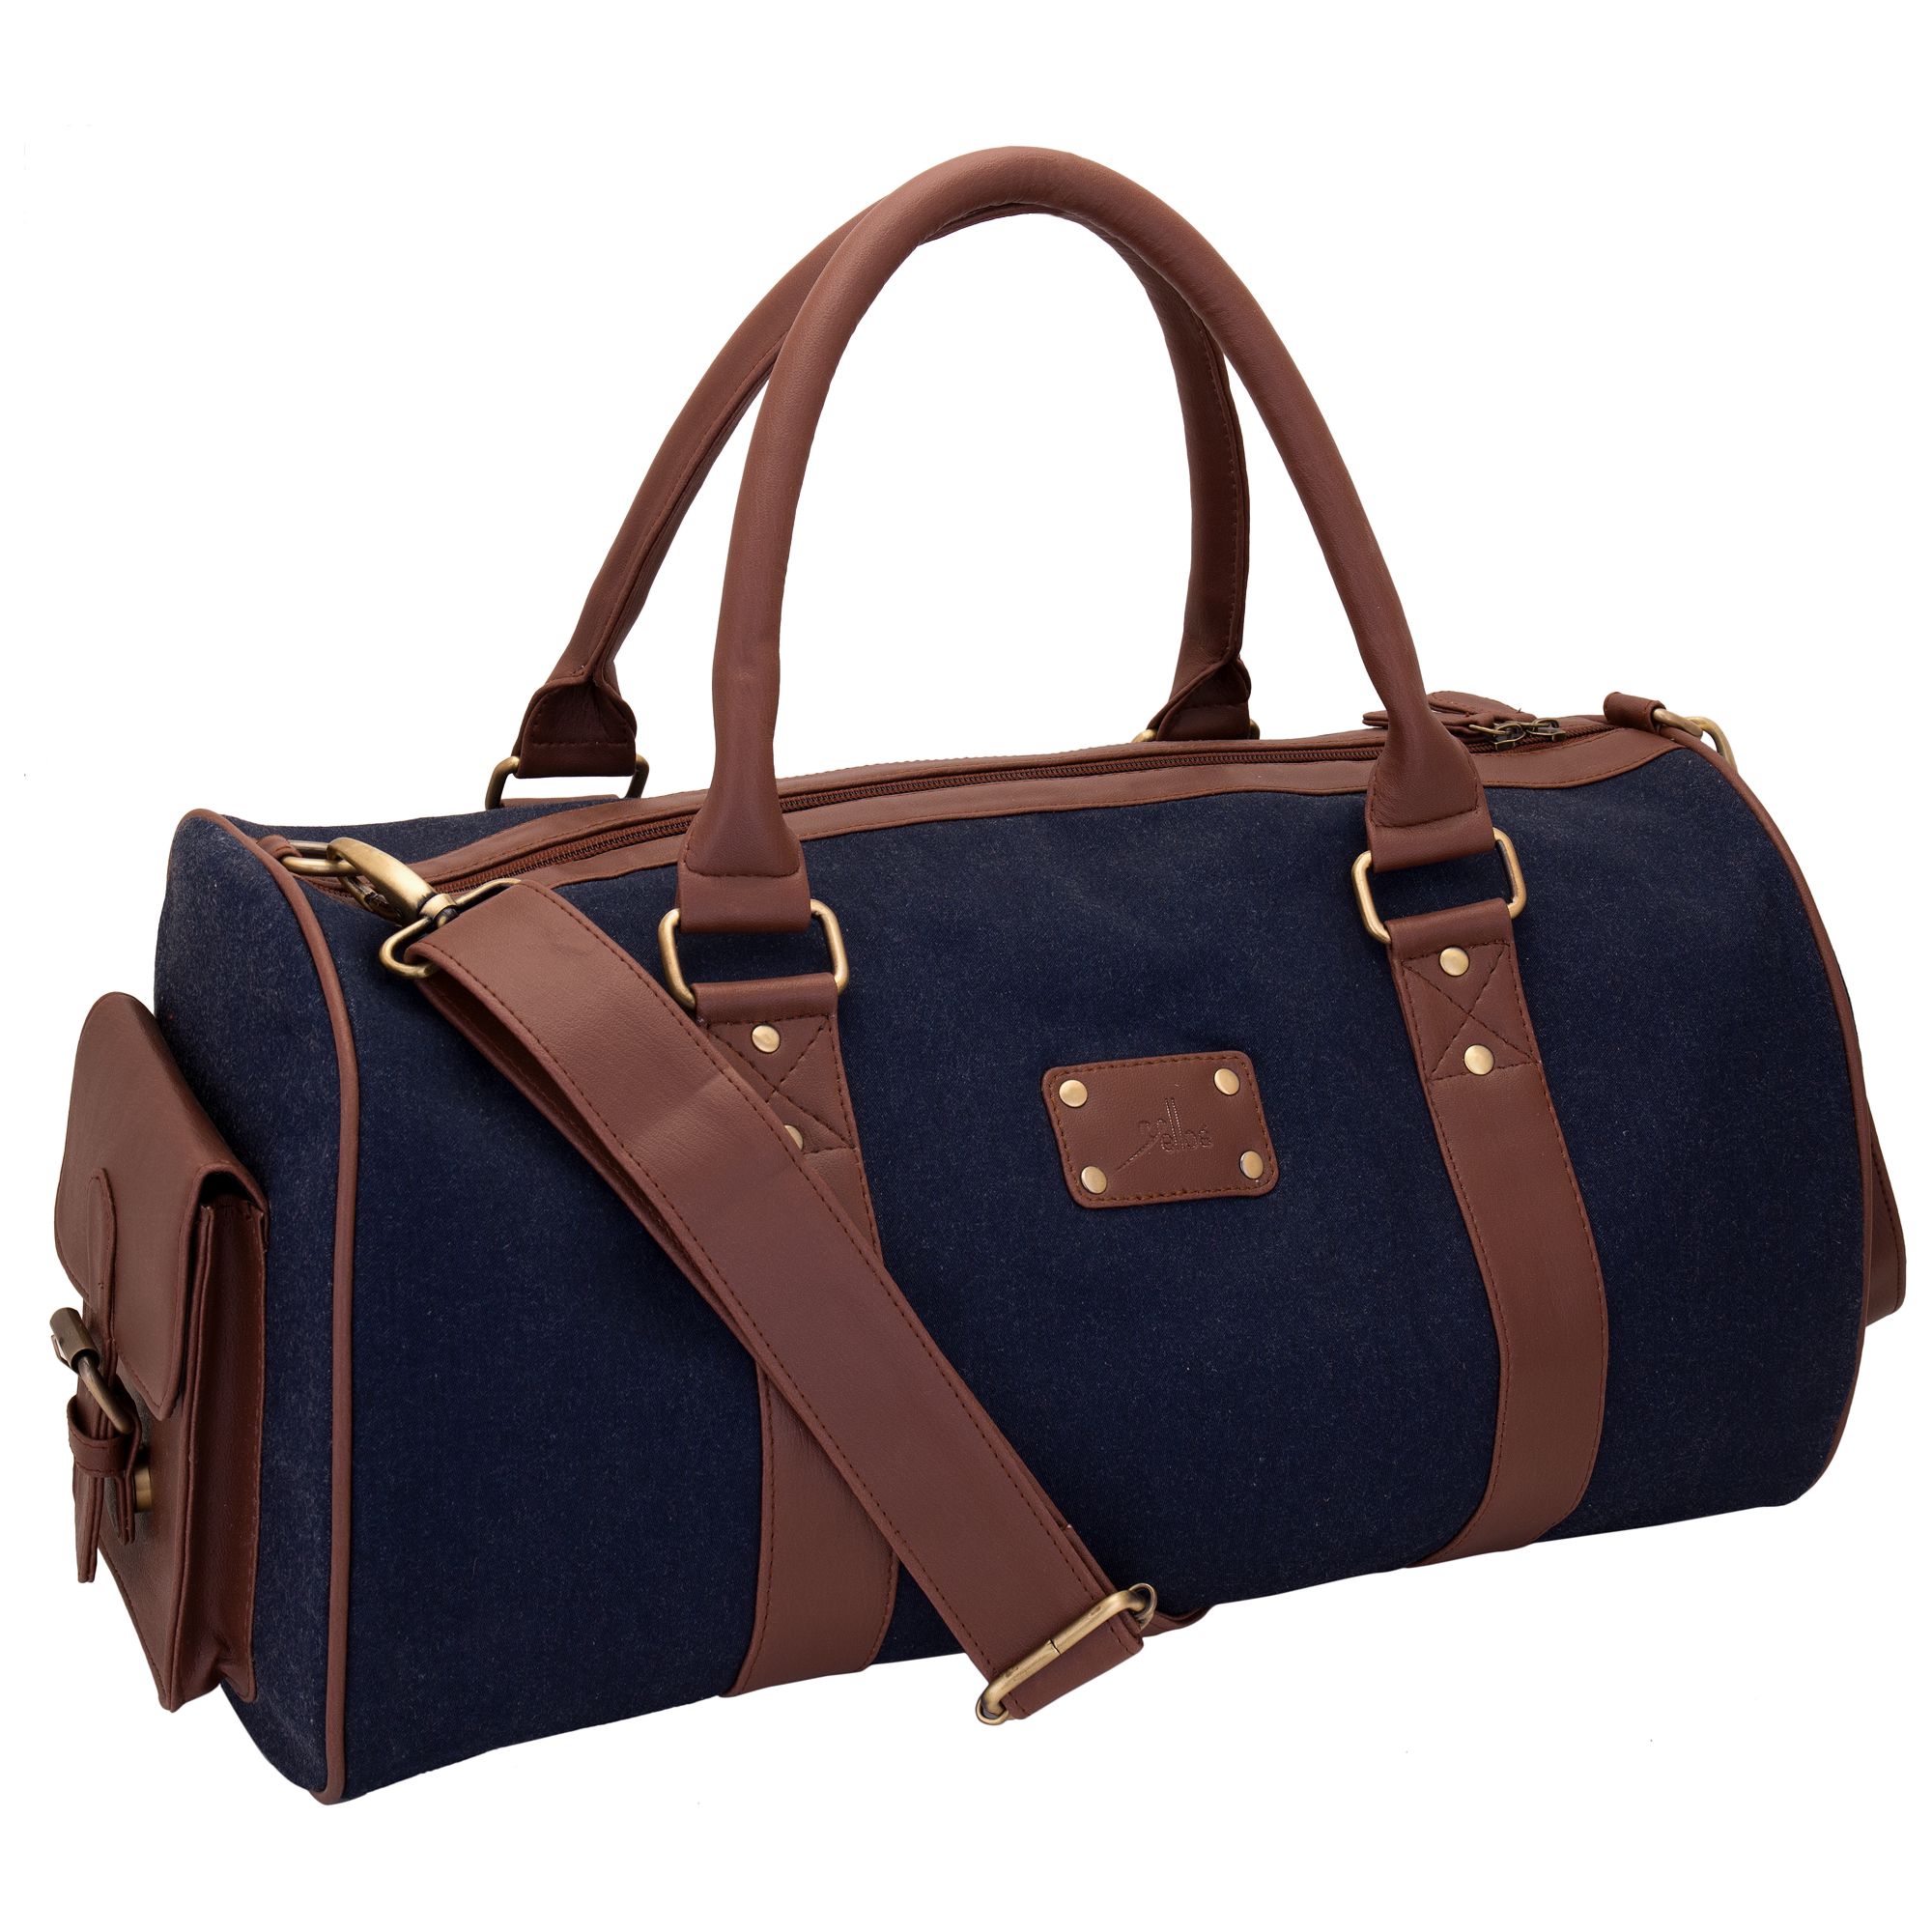 Yelloe Blue Duffle Bag - Buy Yelloe Blue Duffle Bag Online at Low Price ...